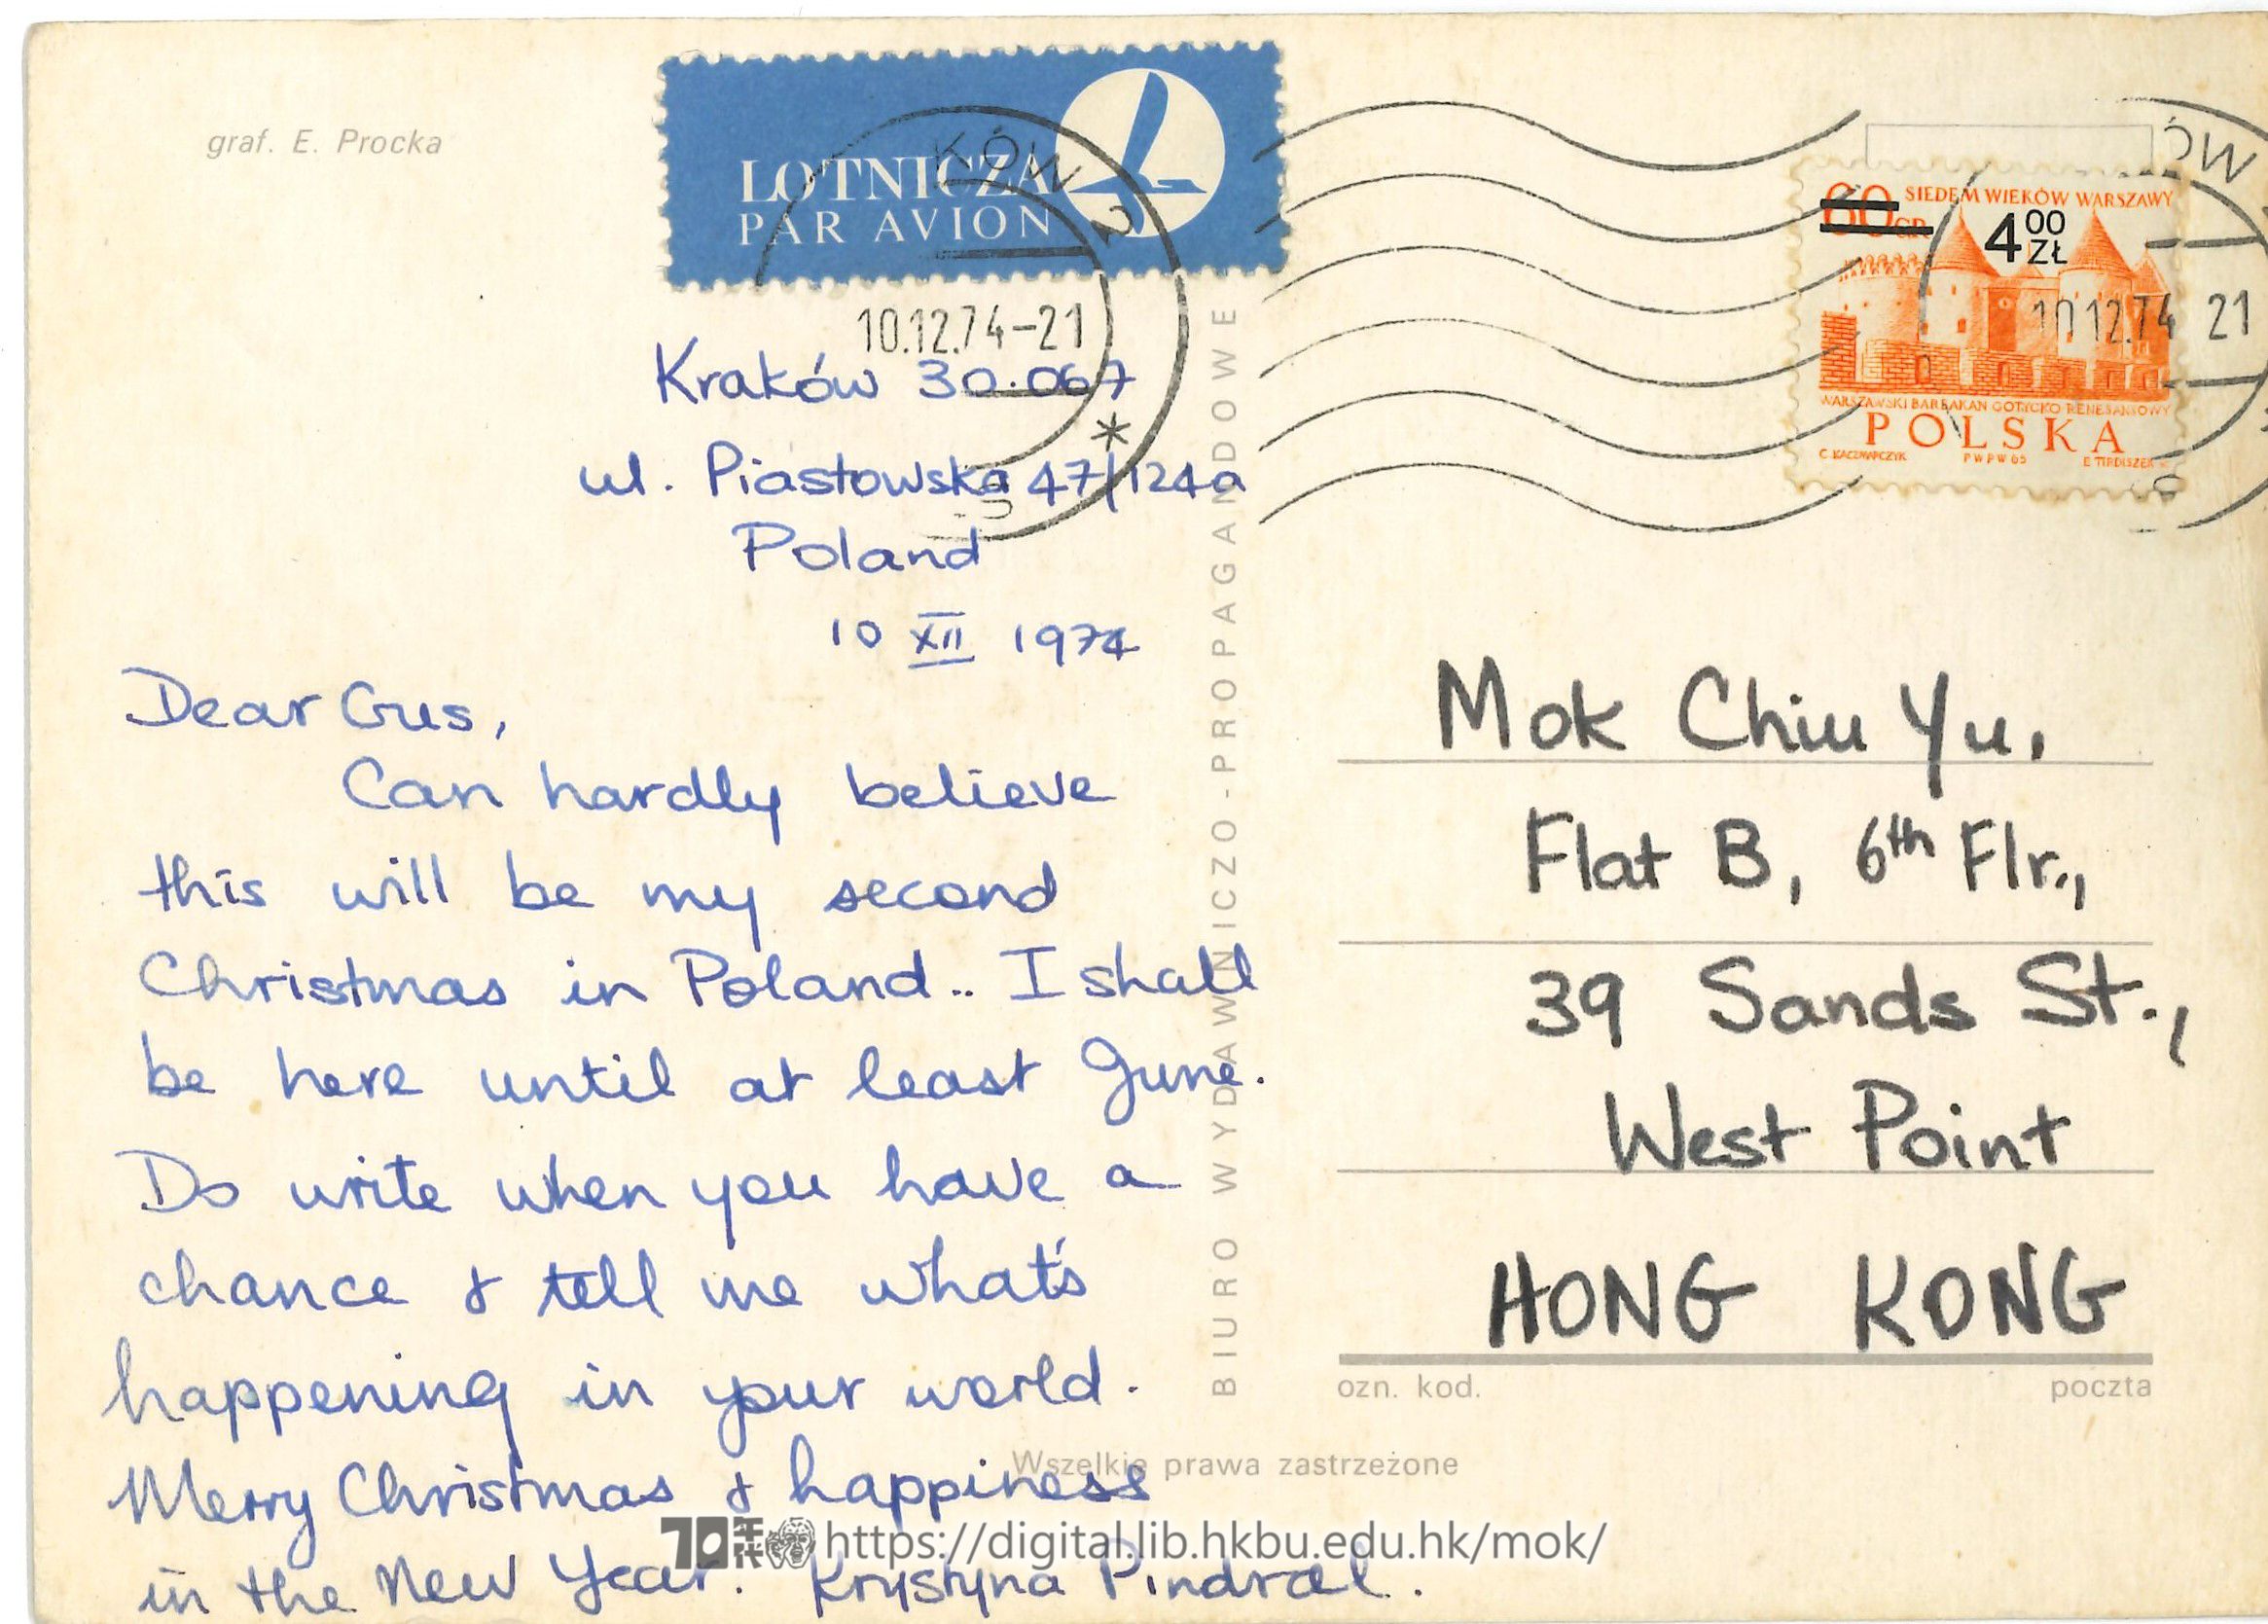   Postcard from Krystina Pindral to Mok Chiu Yu Krokow 